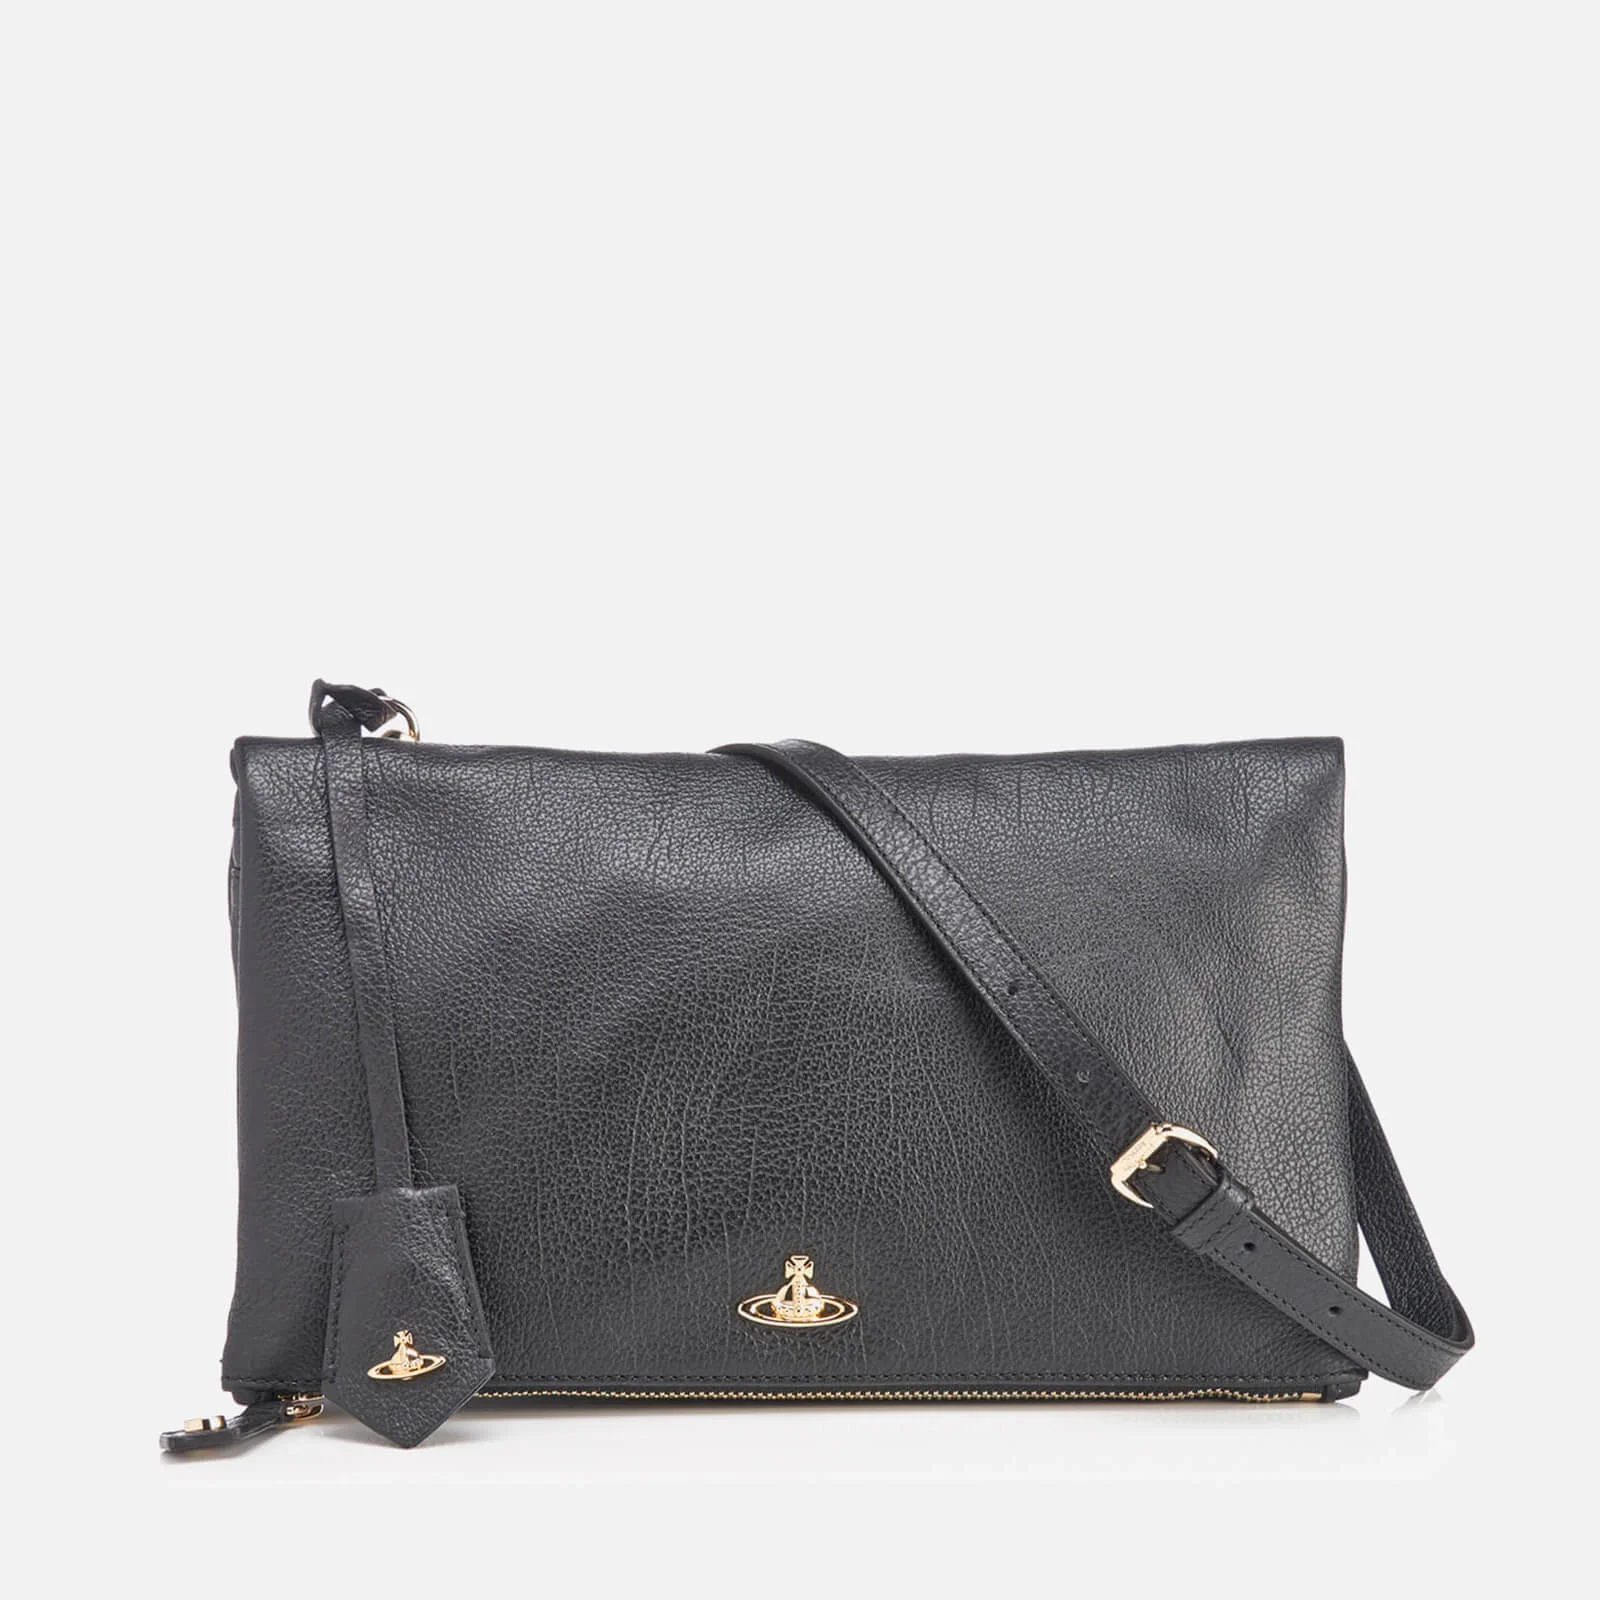 Vivienne Westwood Women's Balmoral Grain Leather Cross Body Bag - Black Image 1